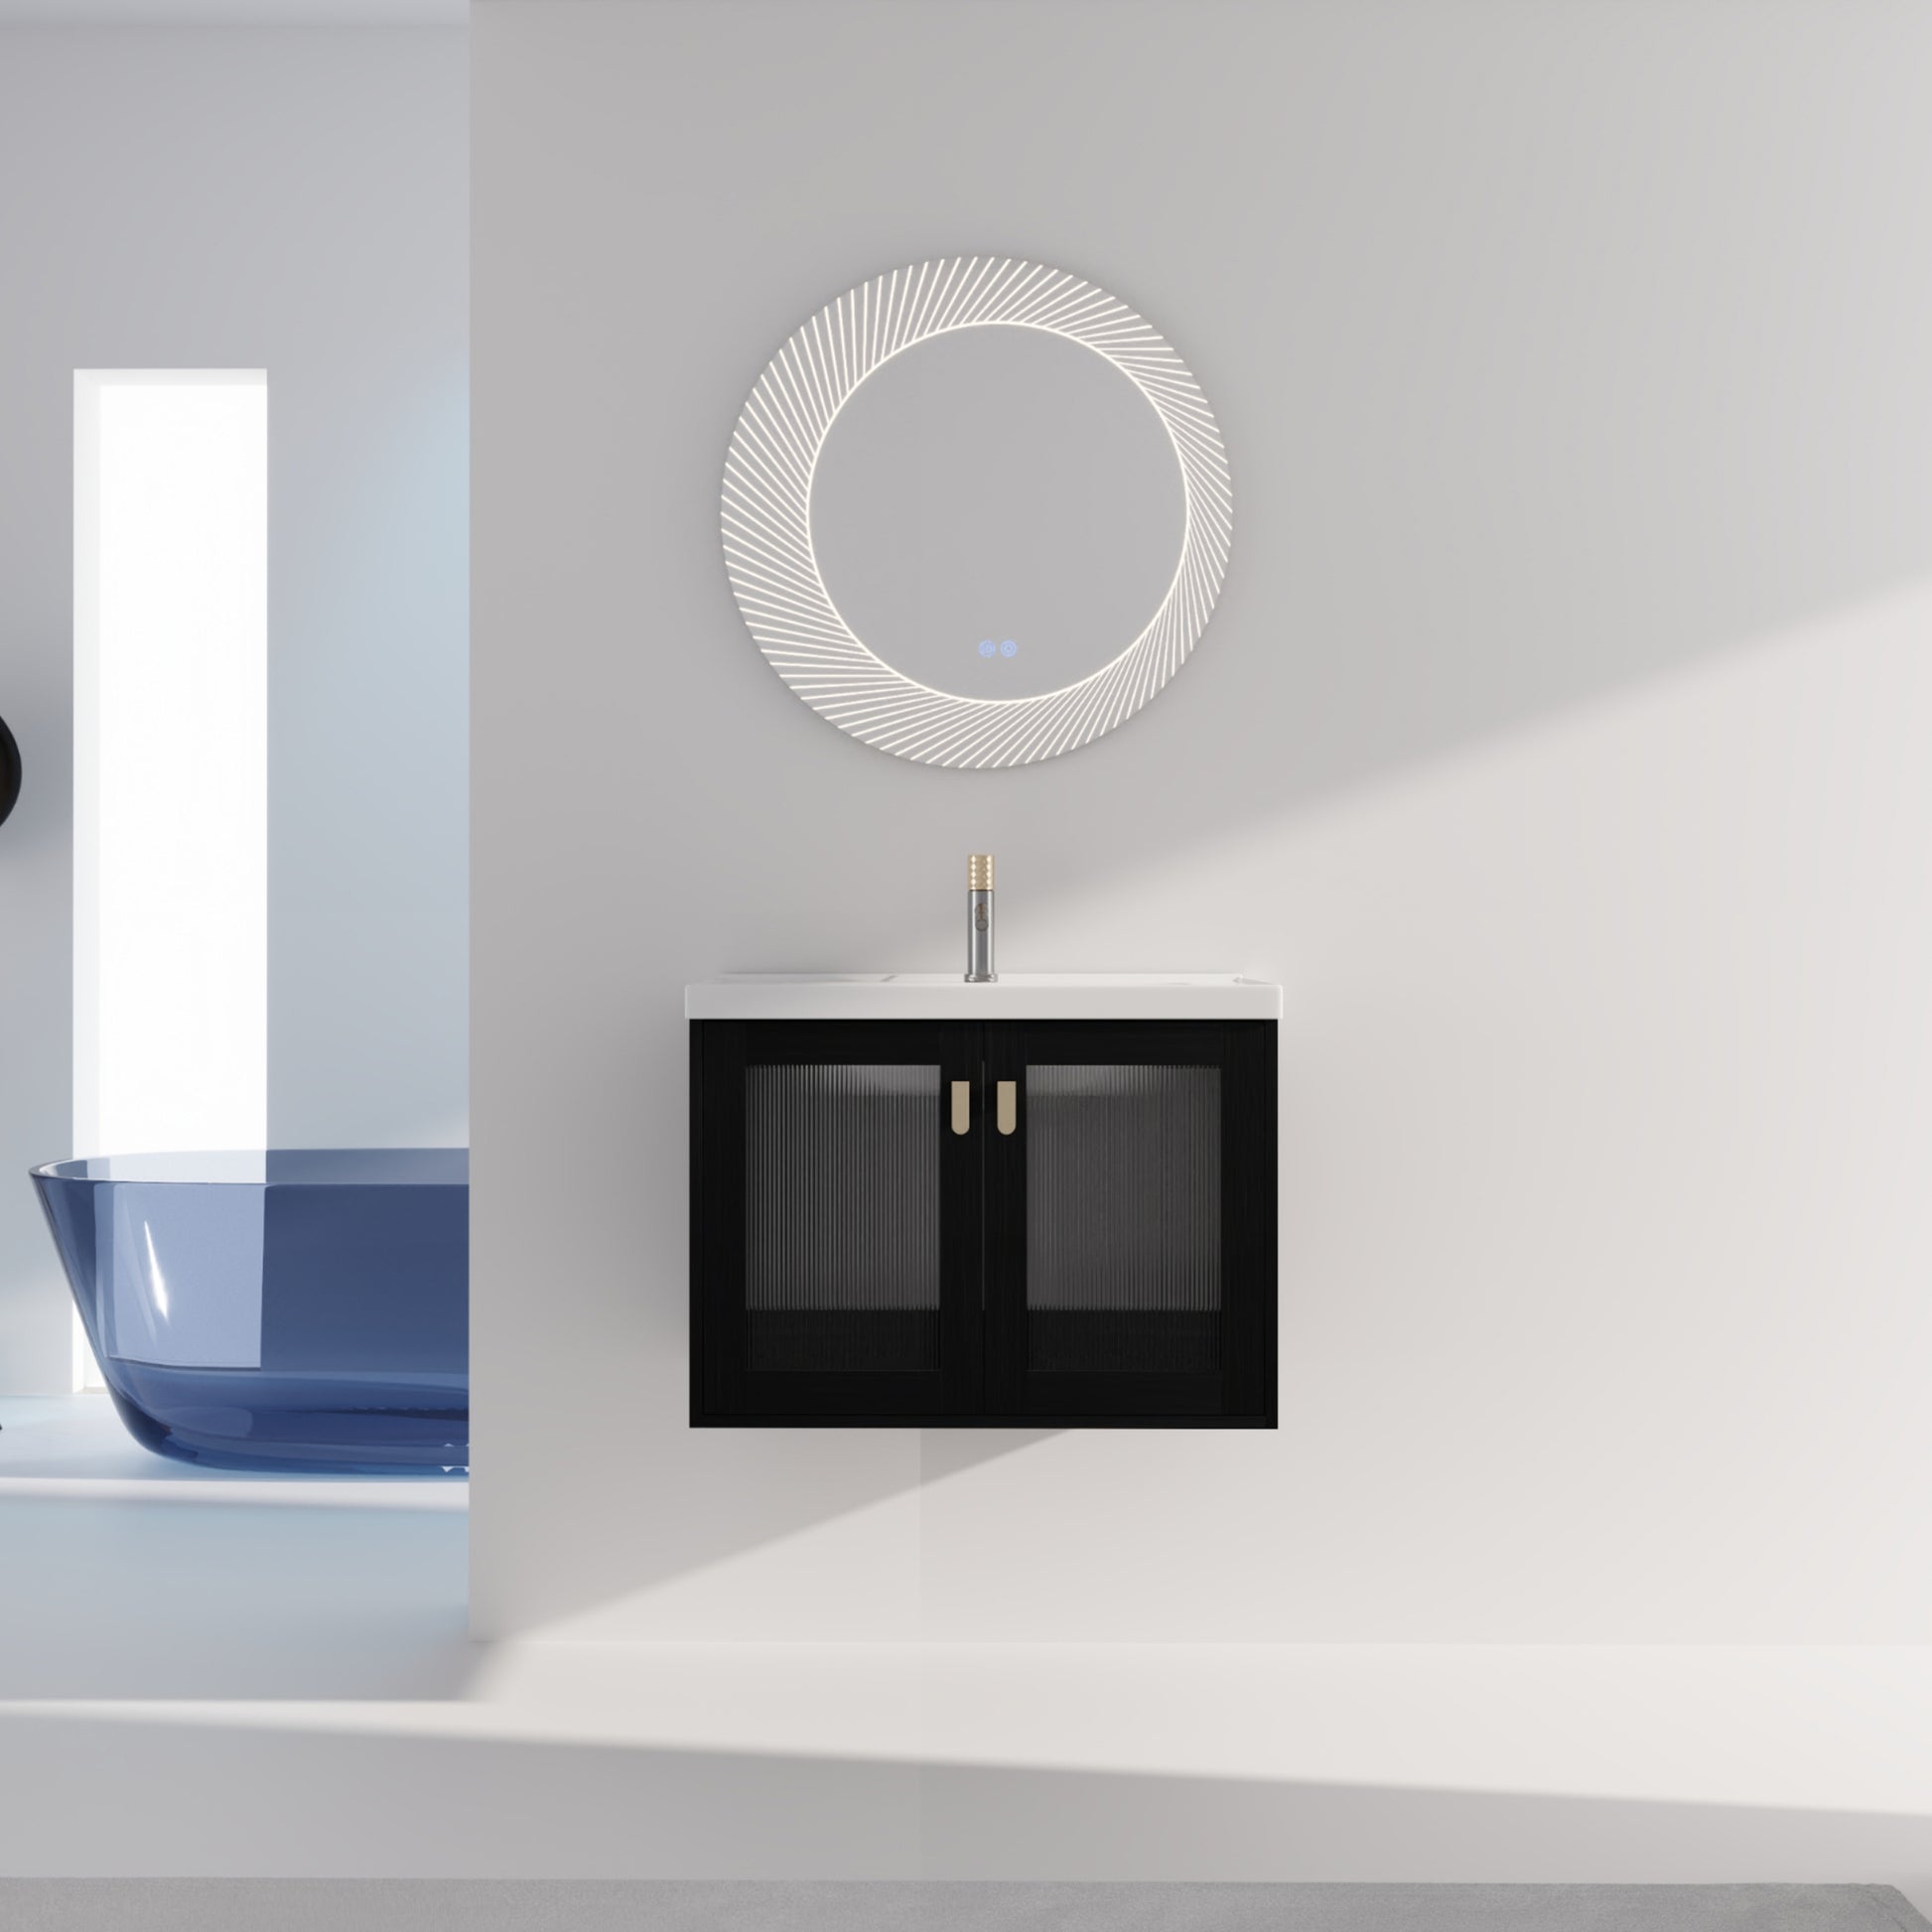 28 Inch Wall Mounted Bathroom Vanity With Sink, For black-2-bathroom-wall mounted-modern-plywood